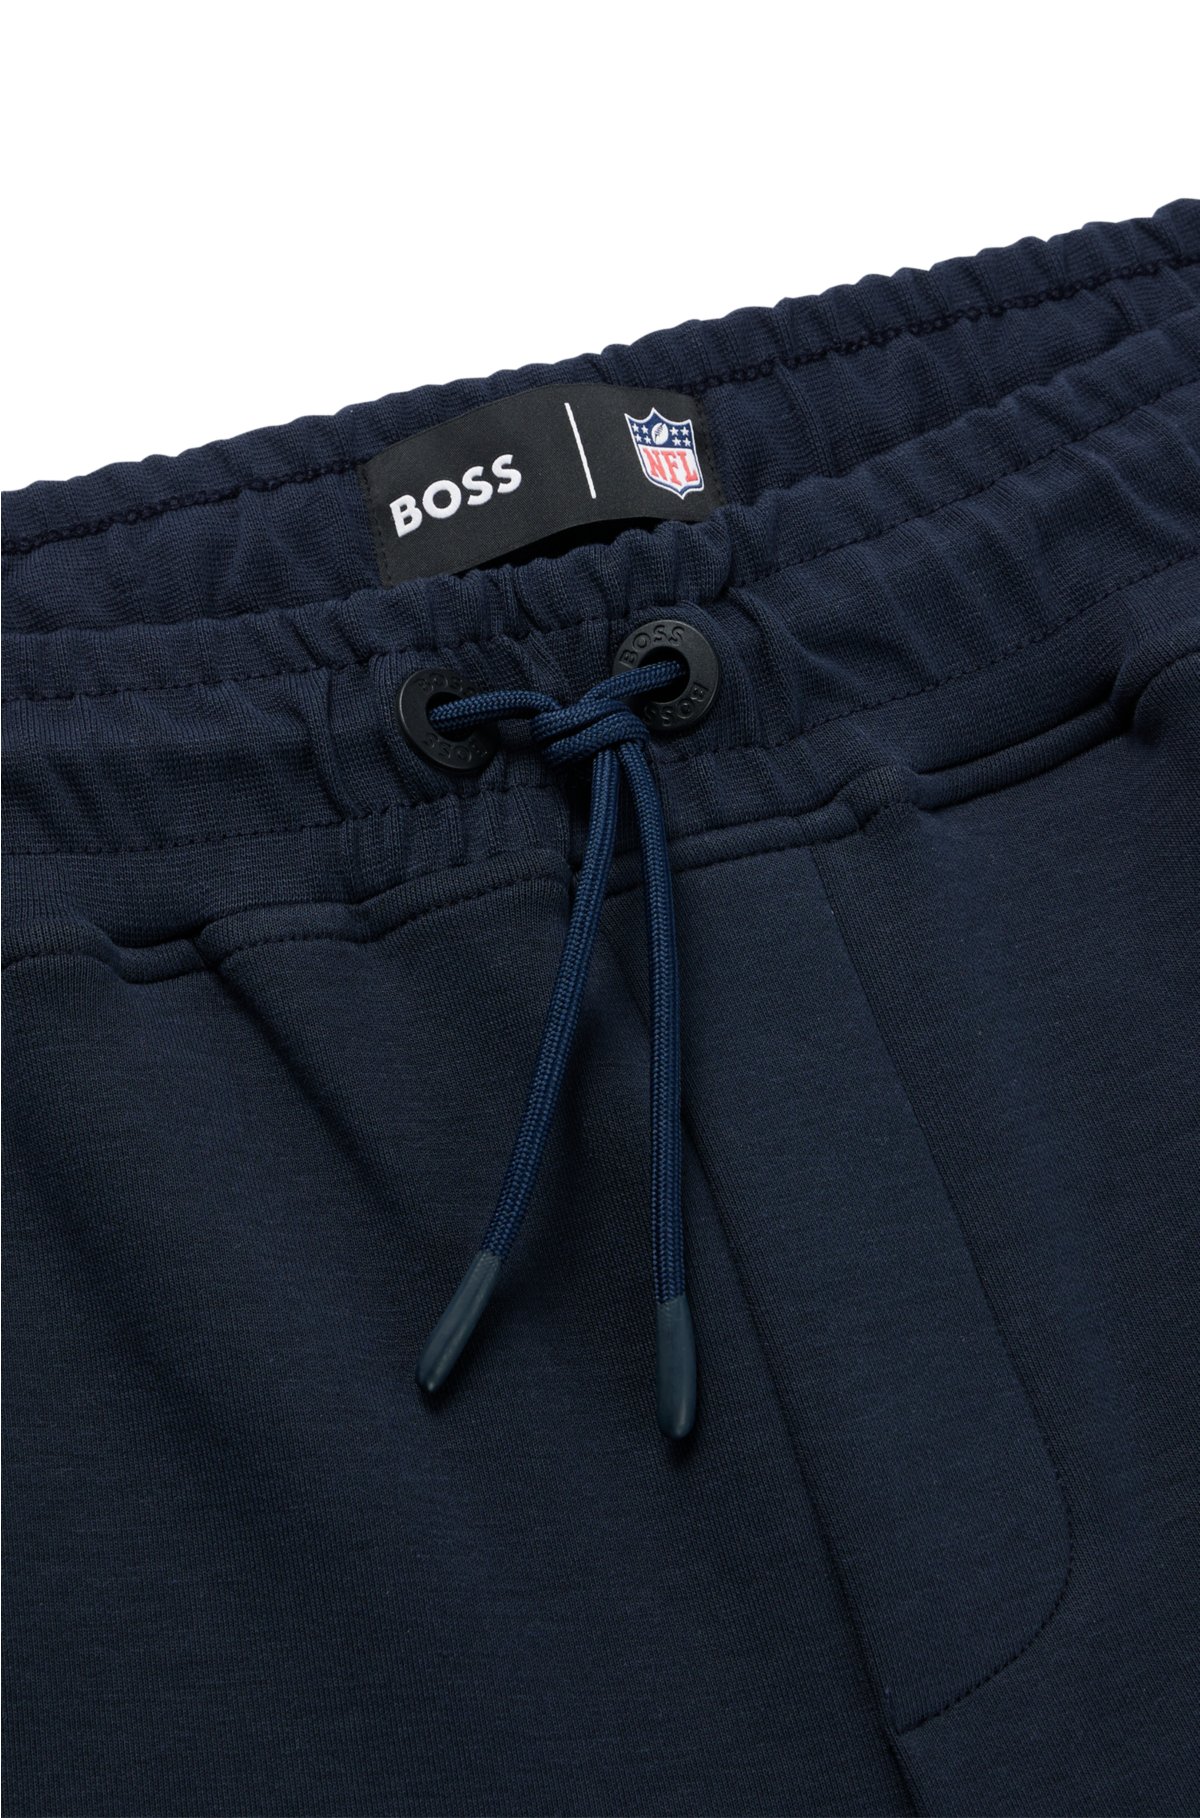 BOSS x NFL cotton-blend tracksuit bottoms with collaborative branding, Patriots